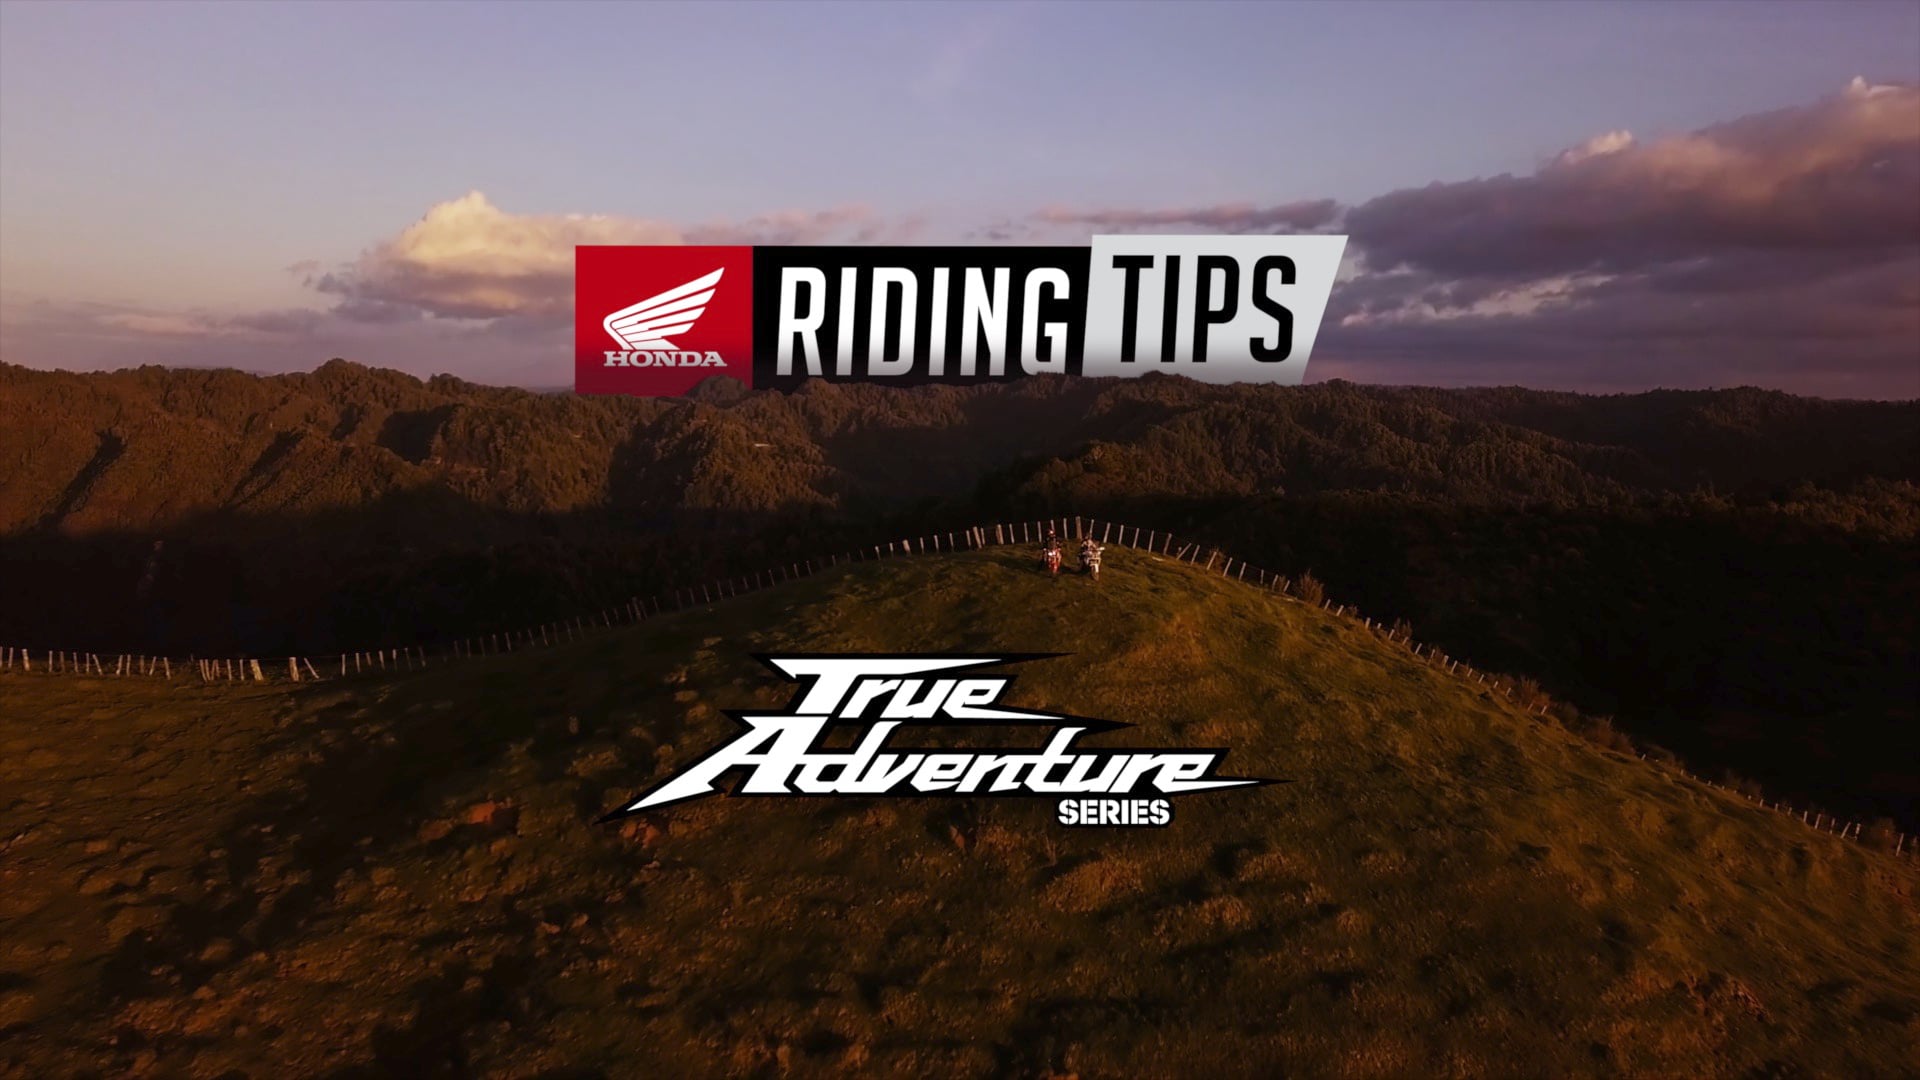 Honda Adventure Riding Tips - Intro